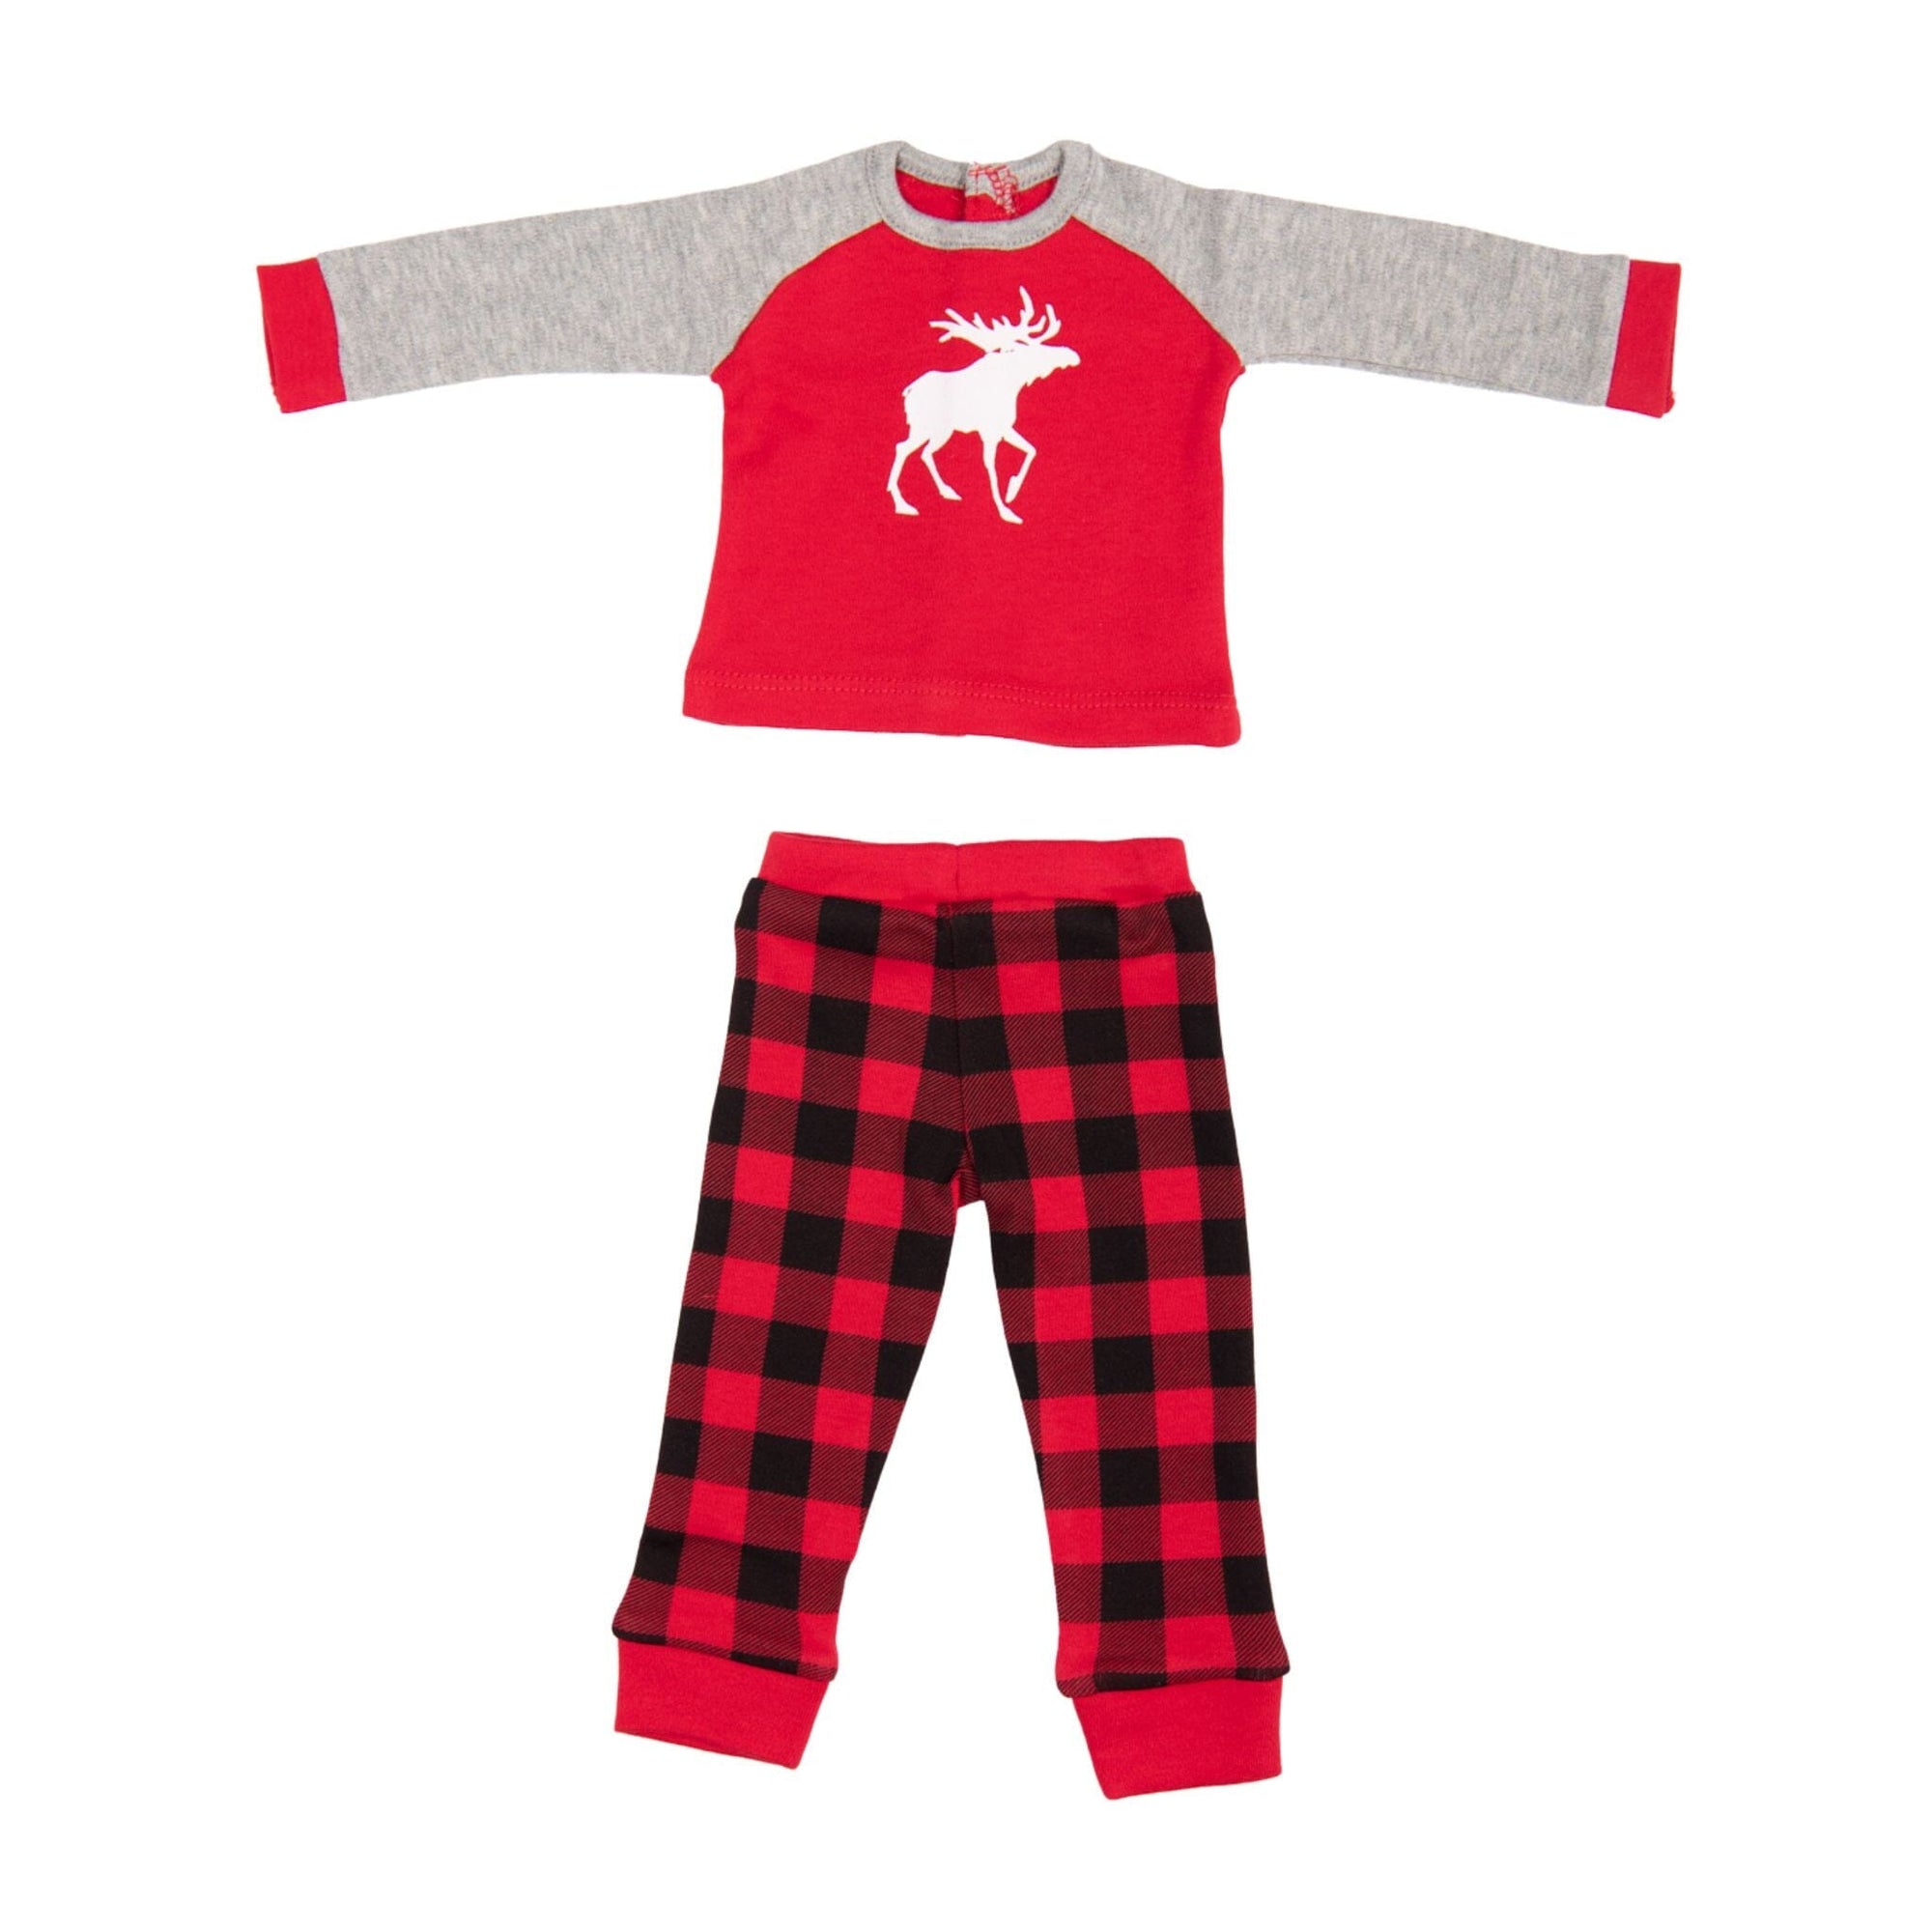 Maplelea, Matching Family Pyjamas